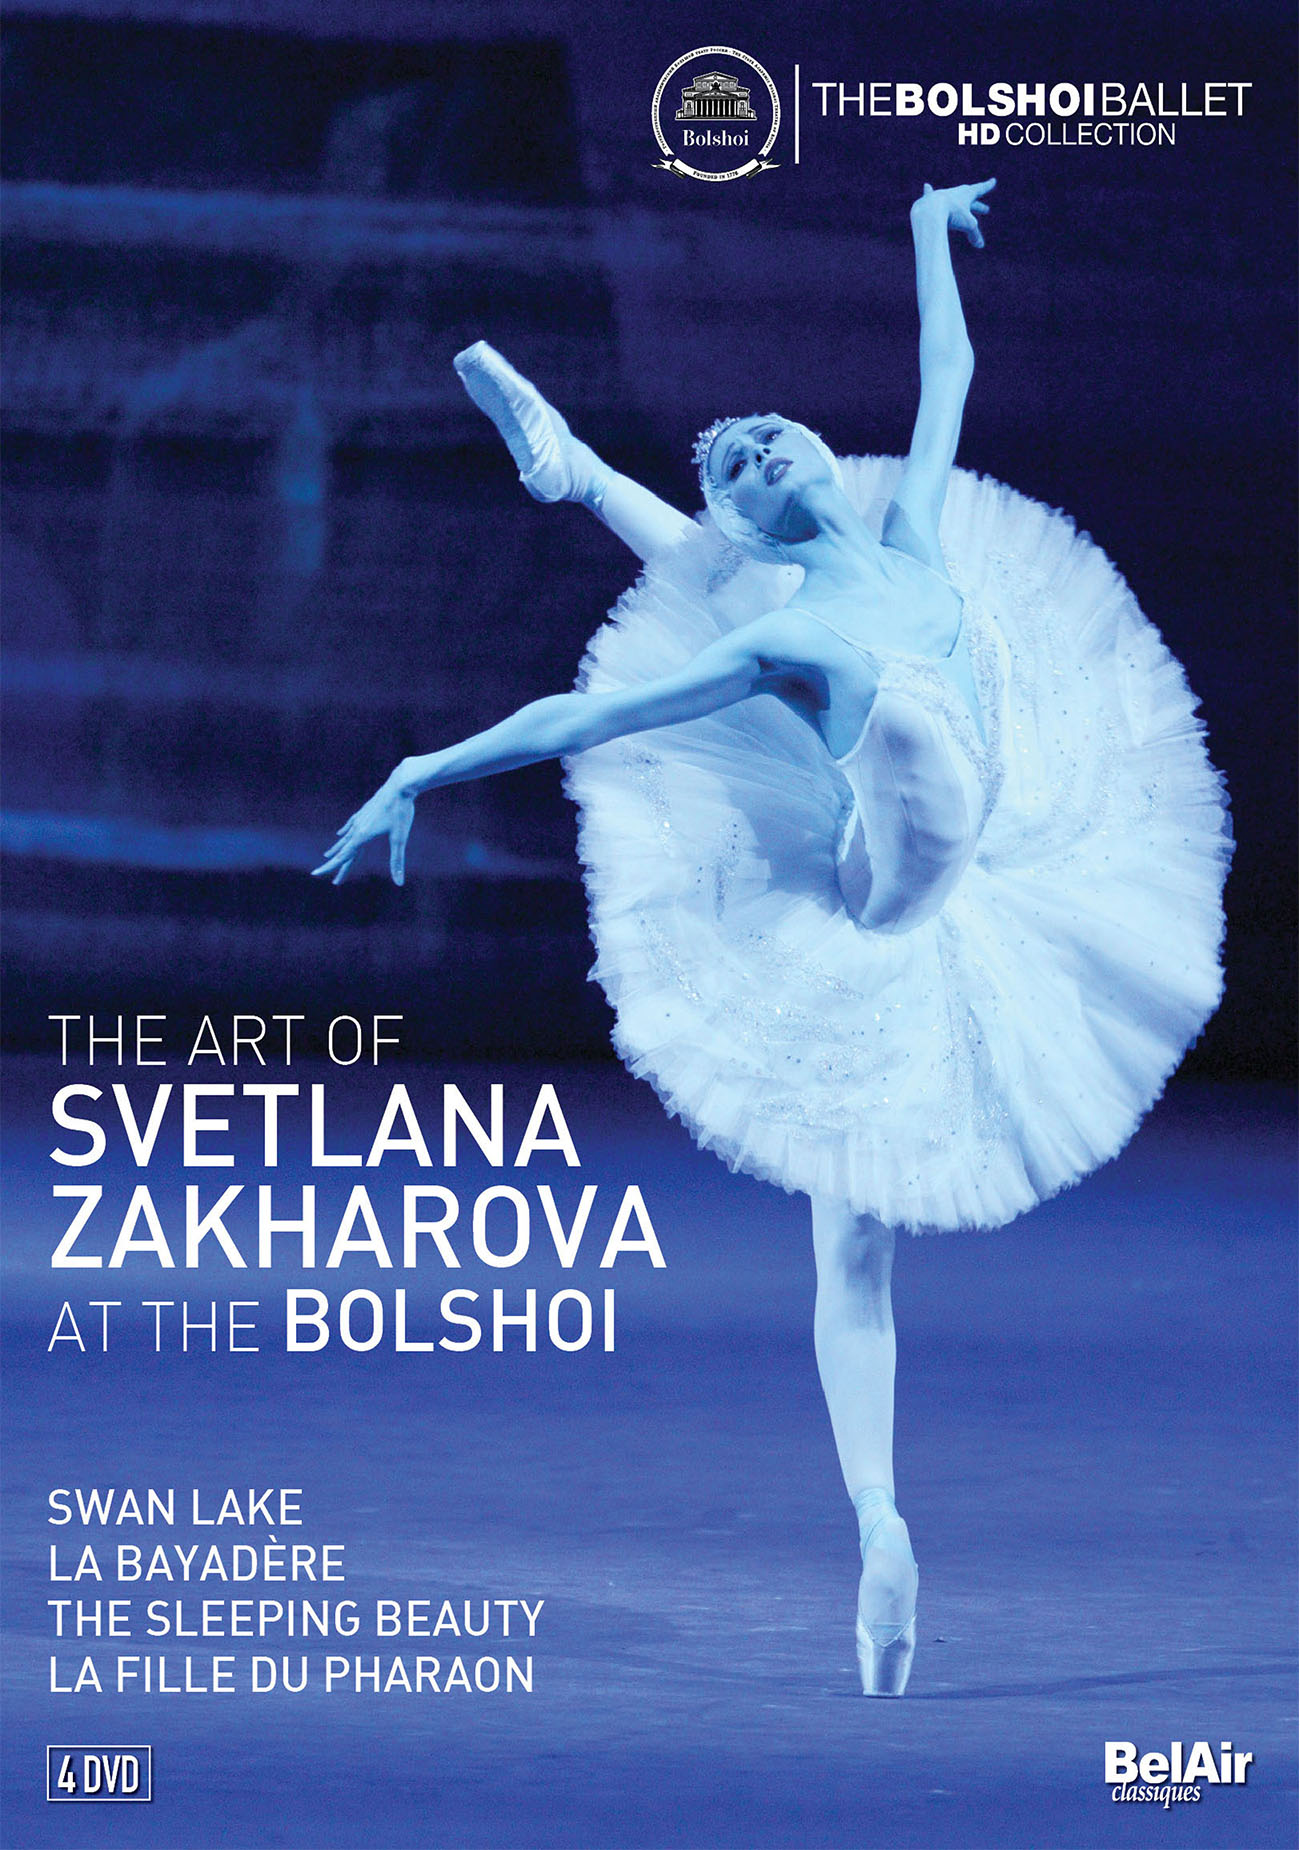 The Art Of Svetlana Zakharova At The Bolshoi 4 Dvd And 4 Blu Ray Box Set